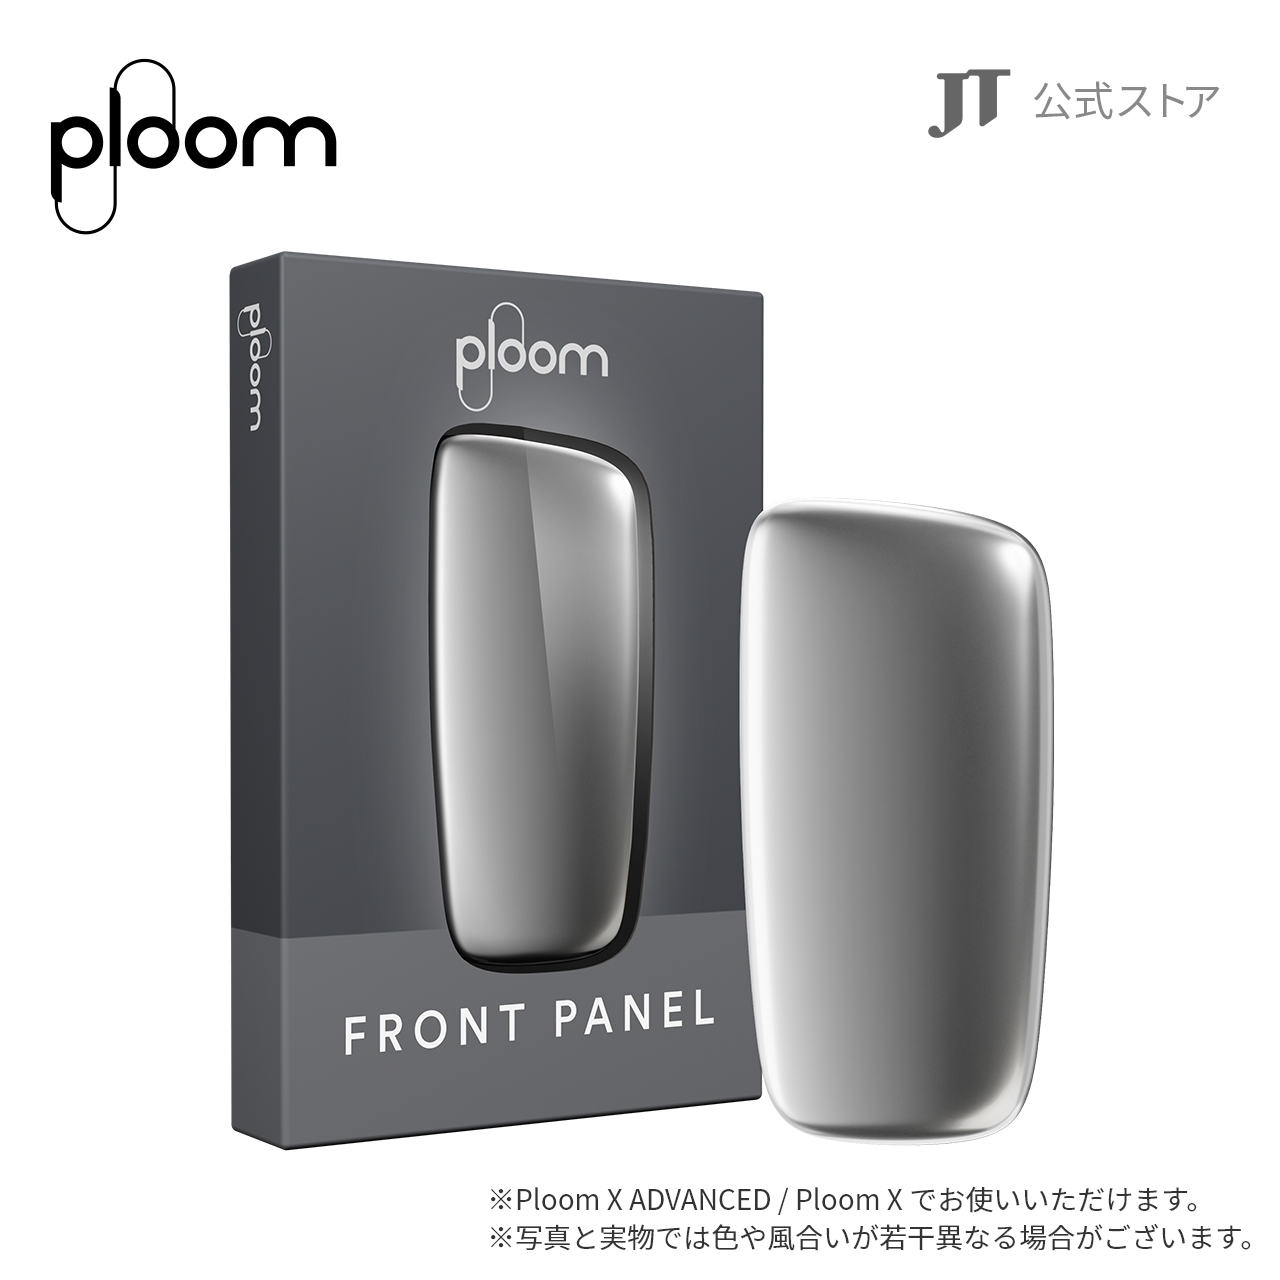 Ploom X フロントパネル （シルバー）の商品画像